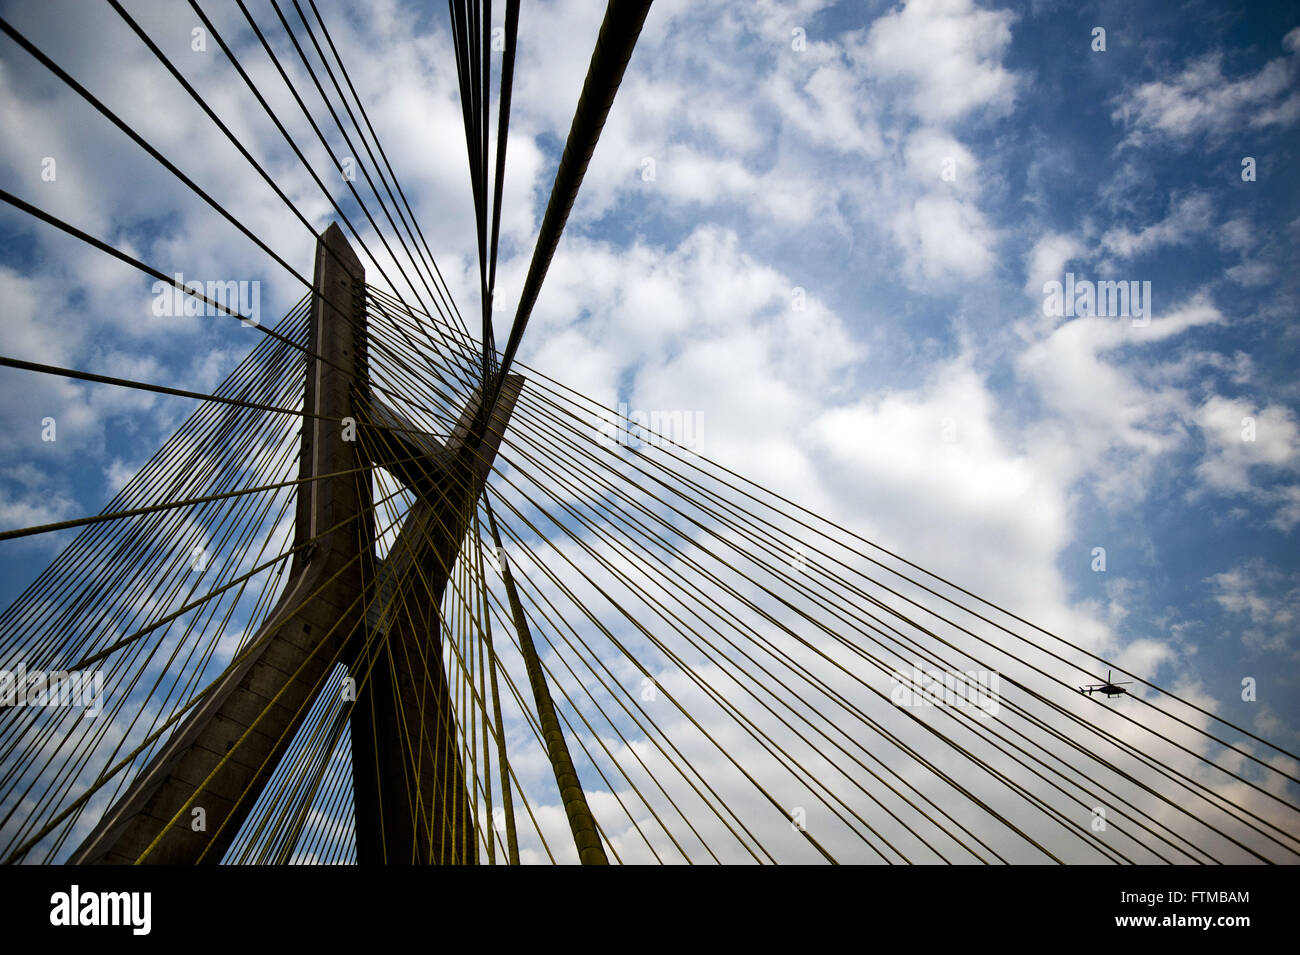 Cable-Stayed Bridge Octavio Frias de Oliveira Foto de stock